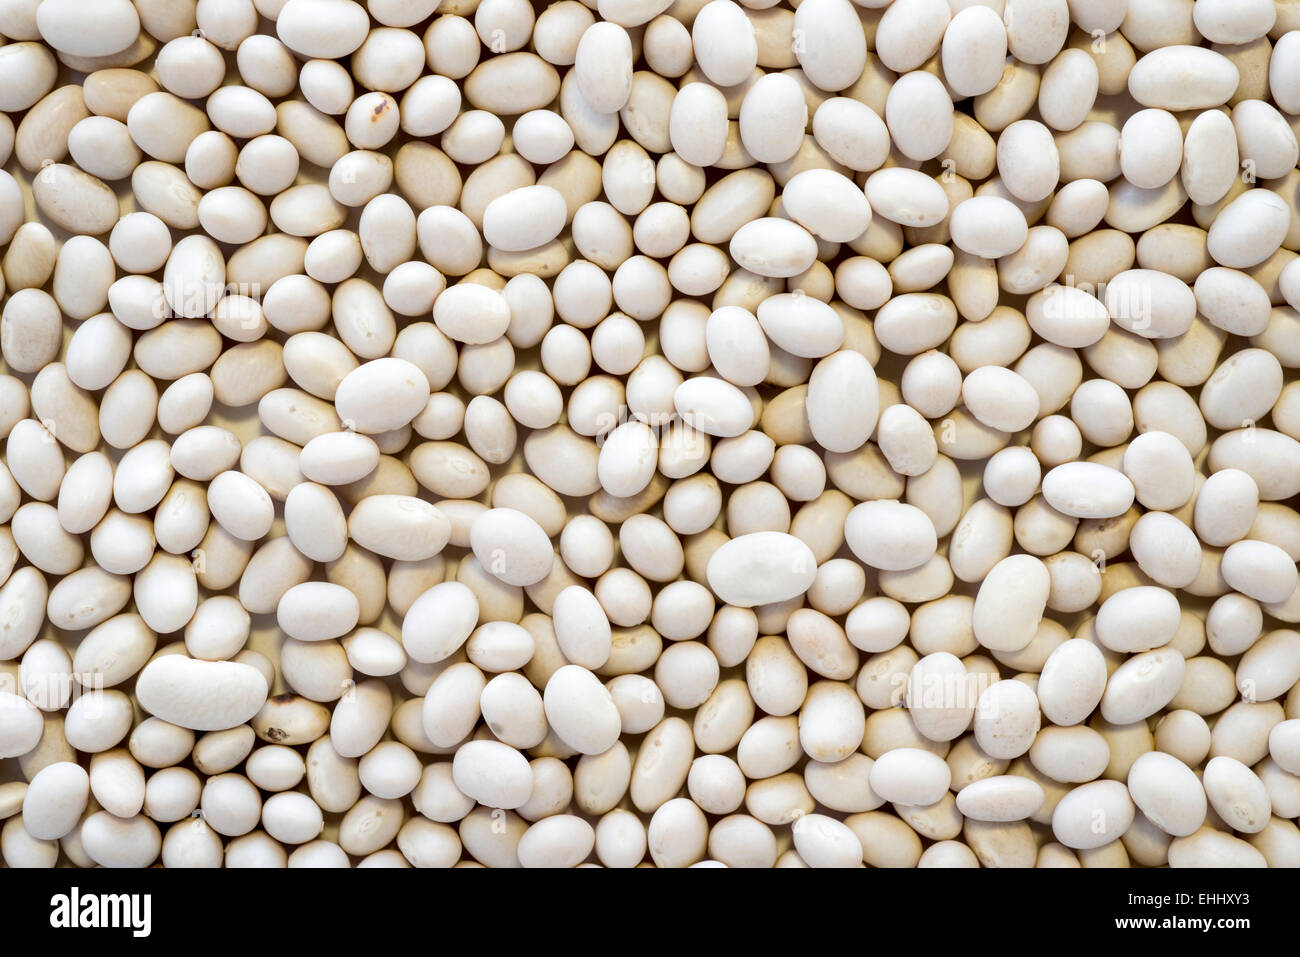 white kidney beans background Stock Photo